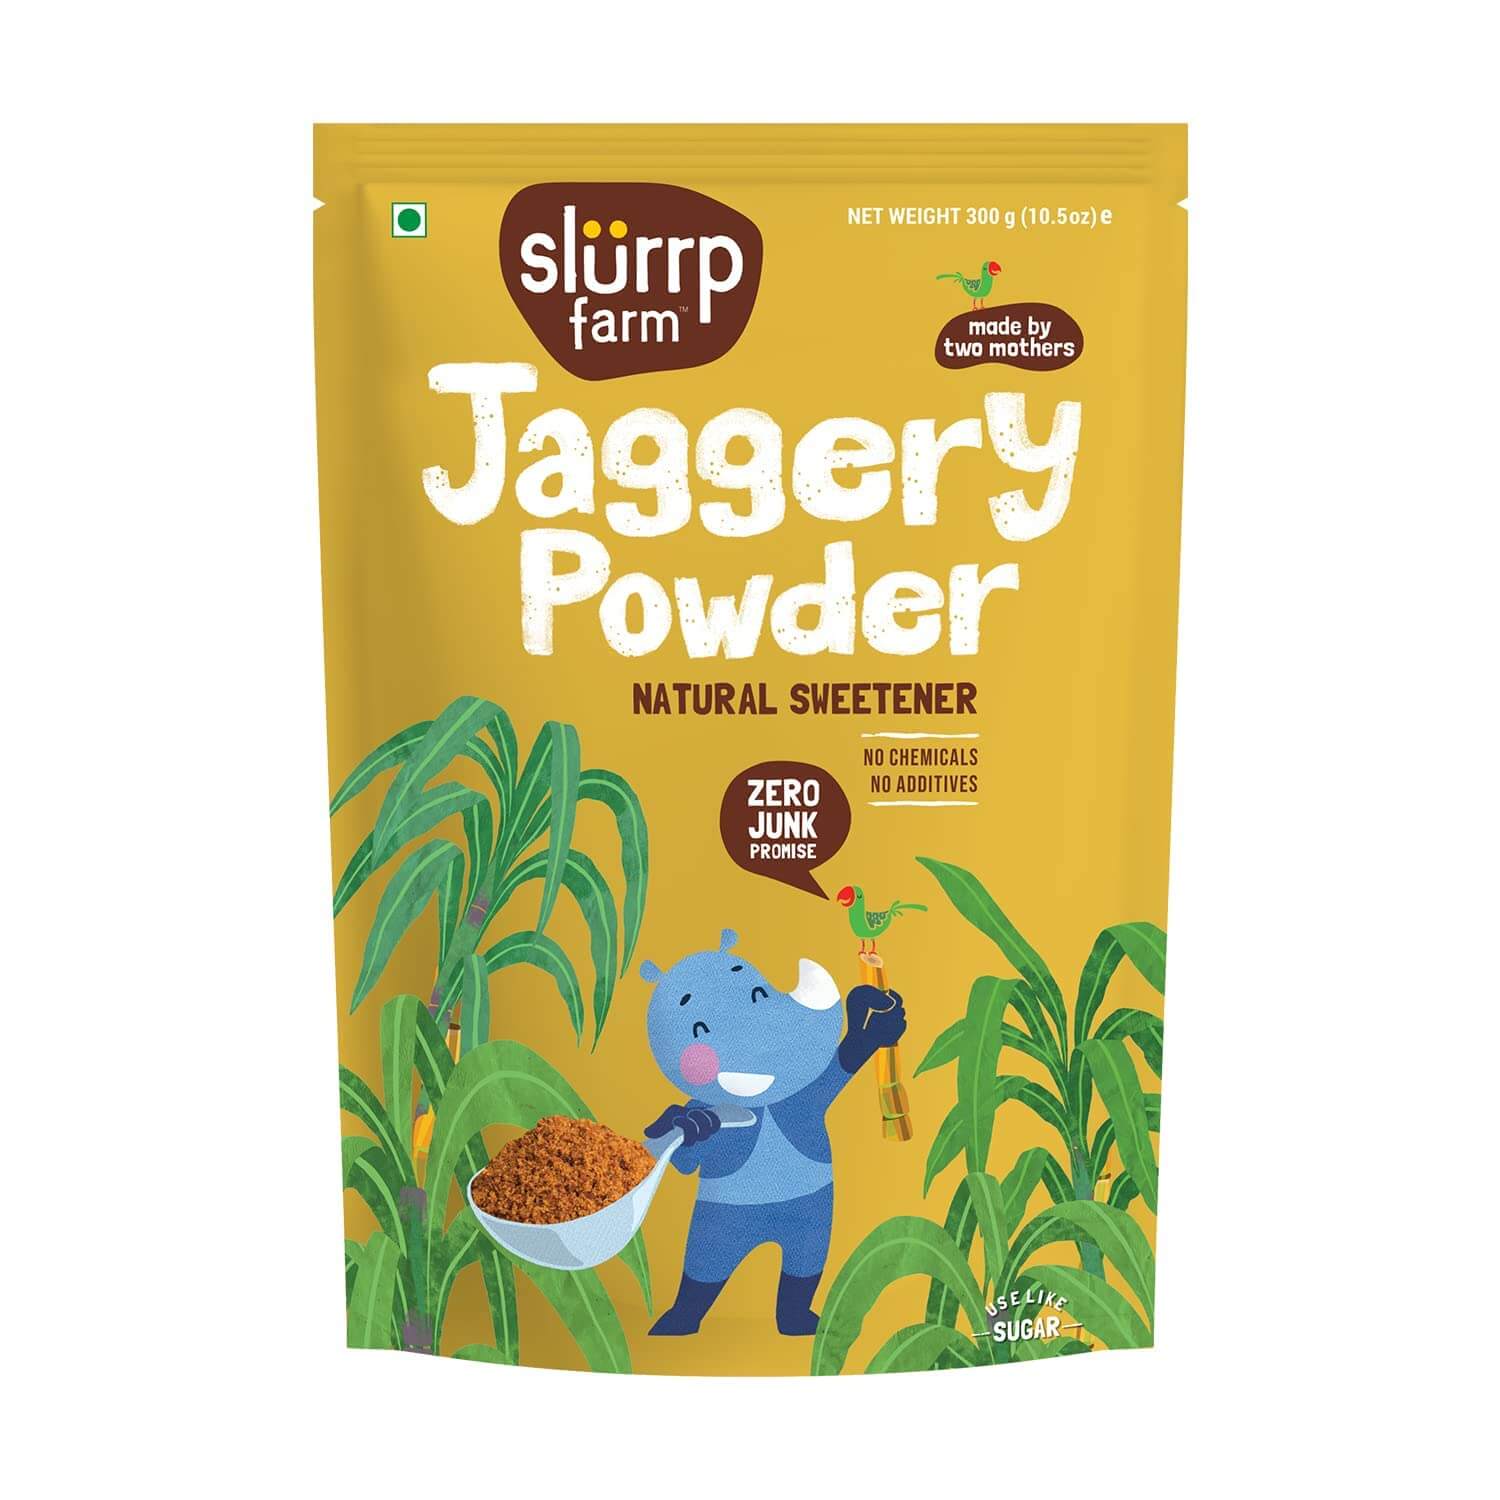 Buy Slurrp Farm Jaggery Powder for Small Children - 300gms Online in India at uyyaala.com